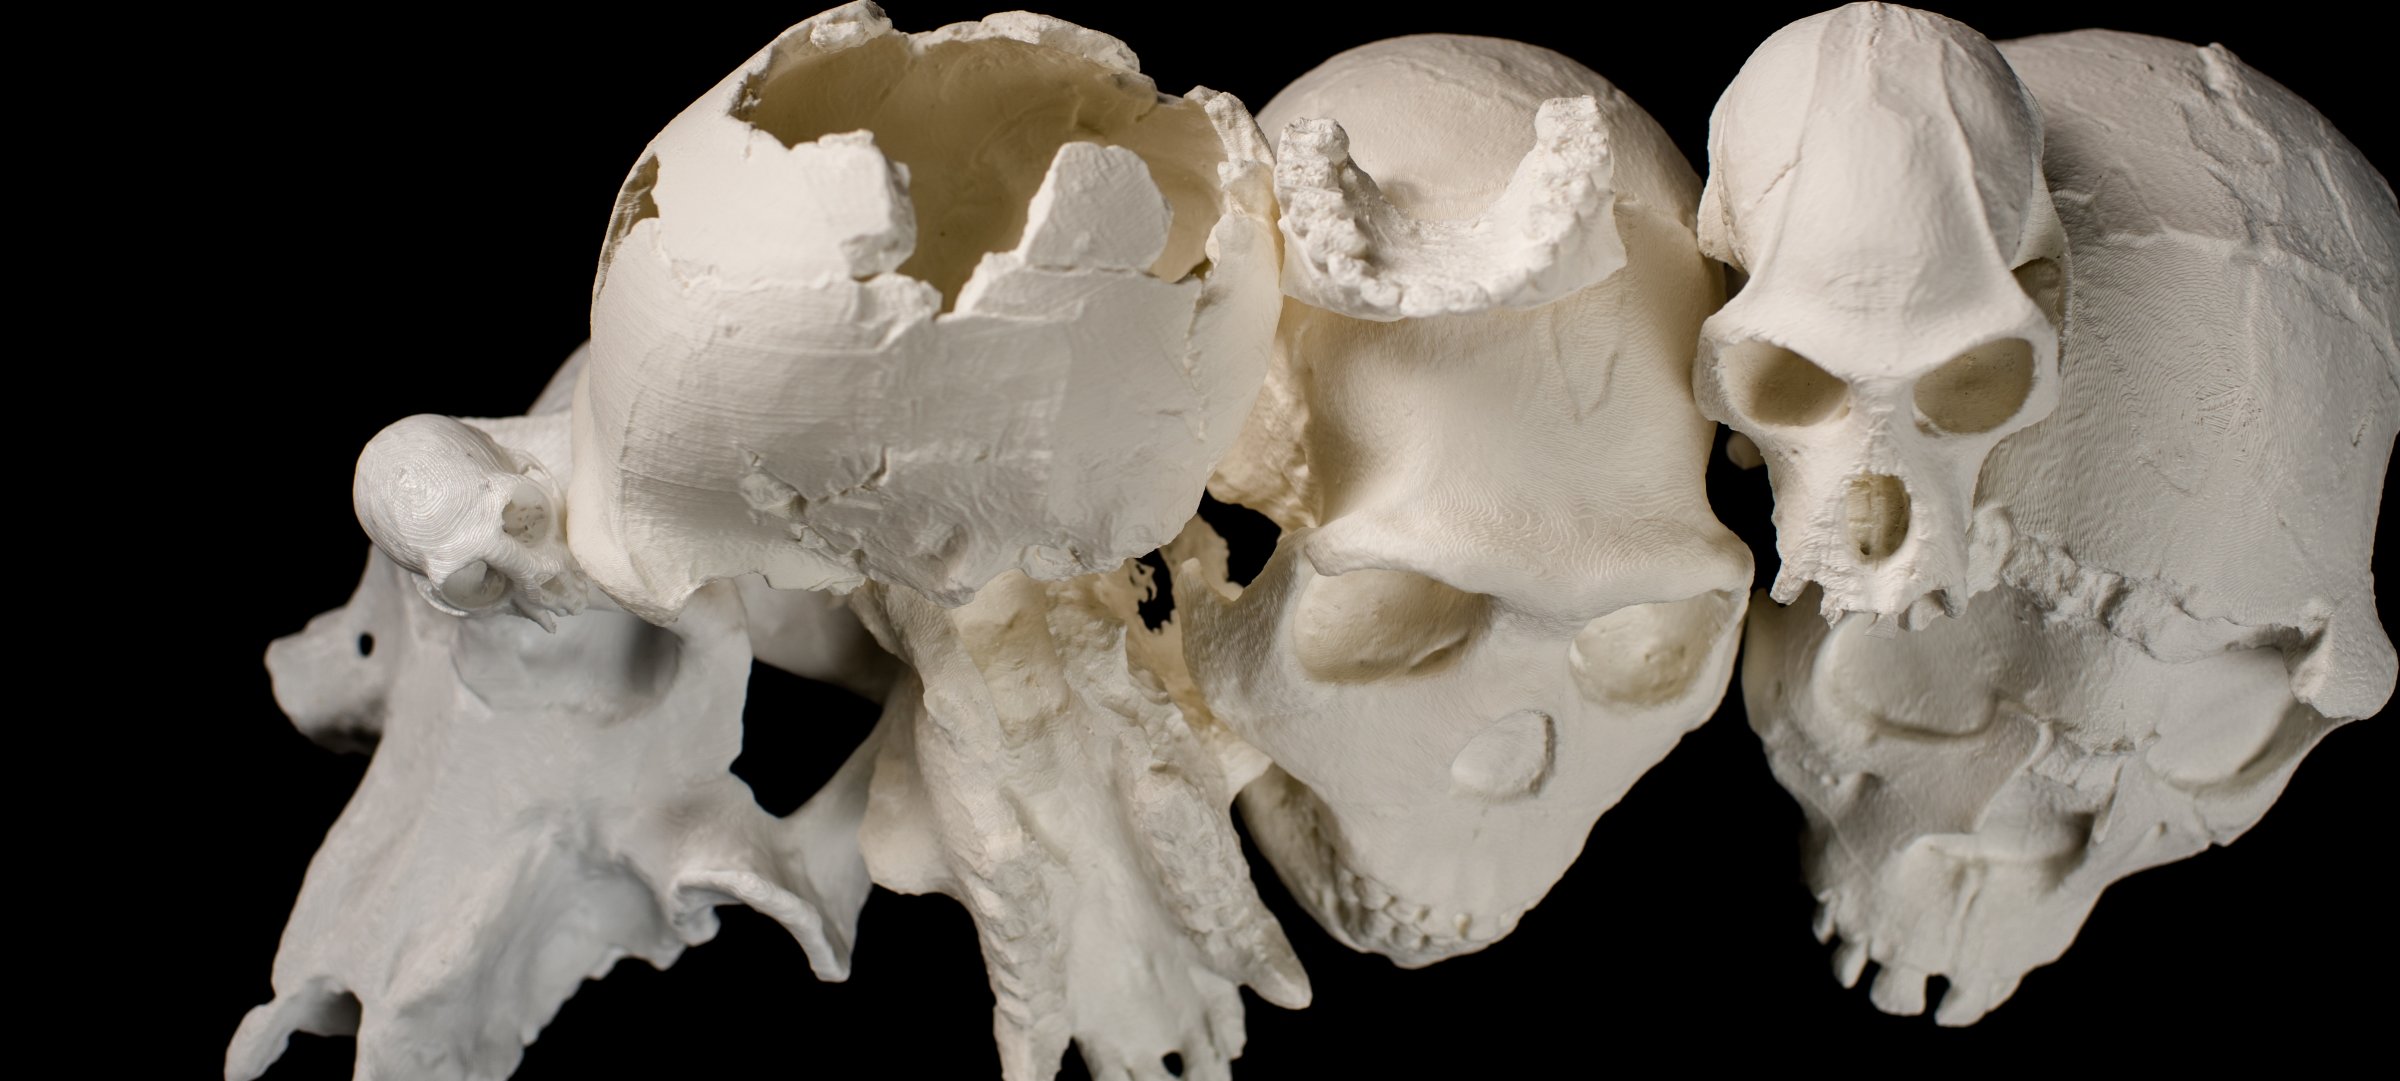 Replica skulls printed by 3D printer at Michigan Tech.